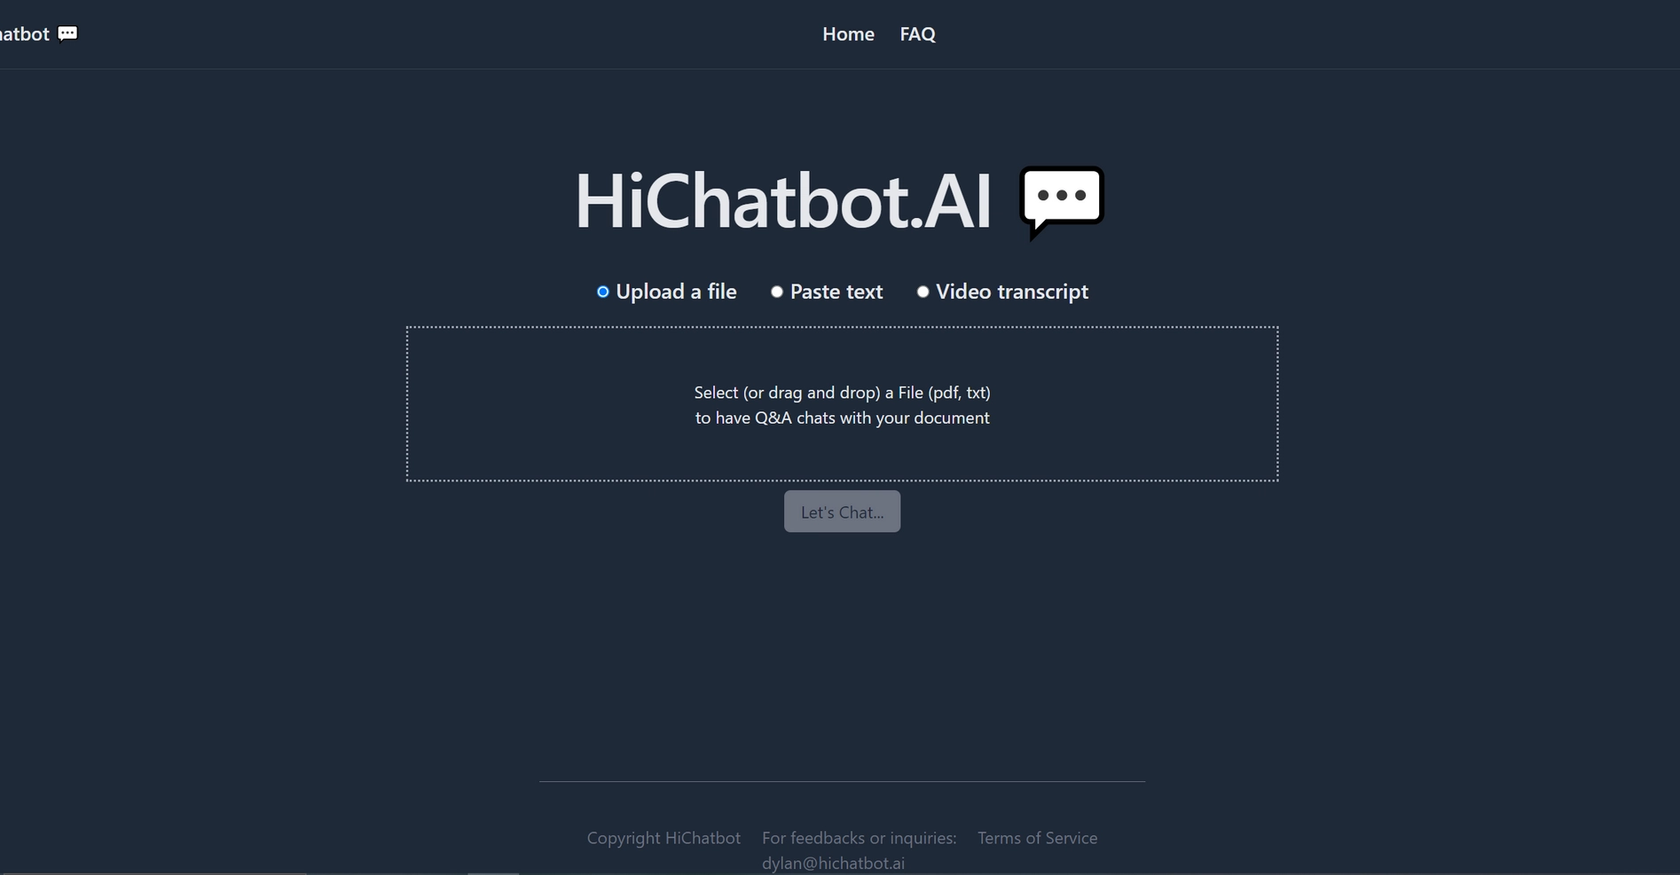 HiChatbot